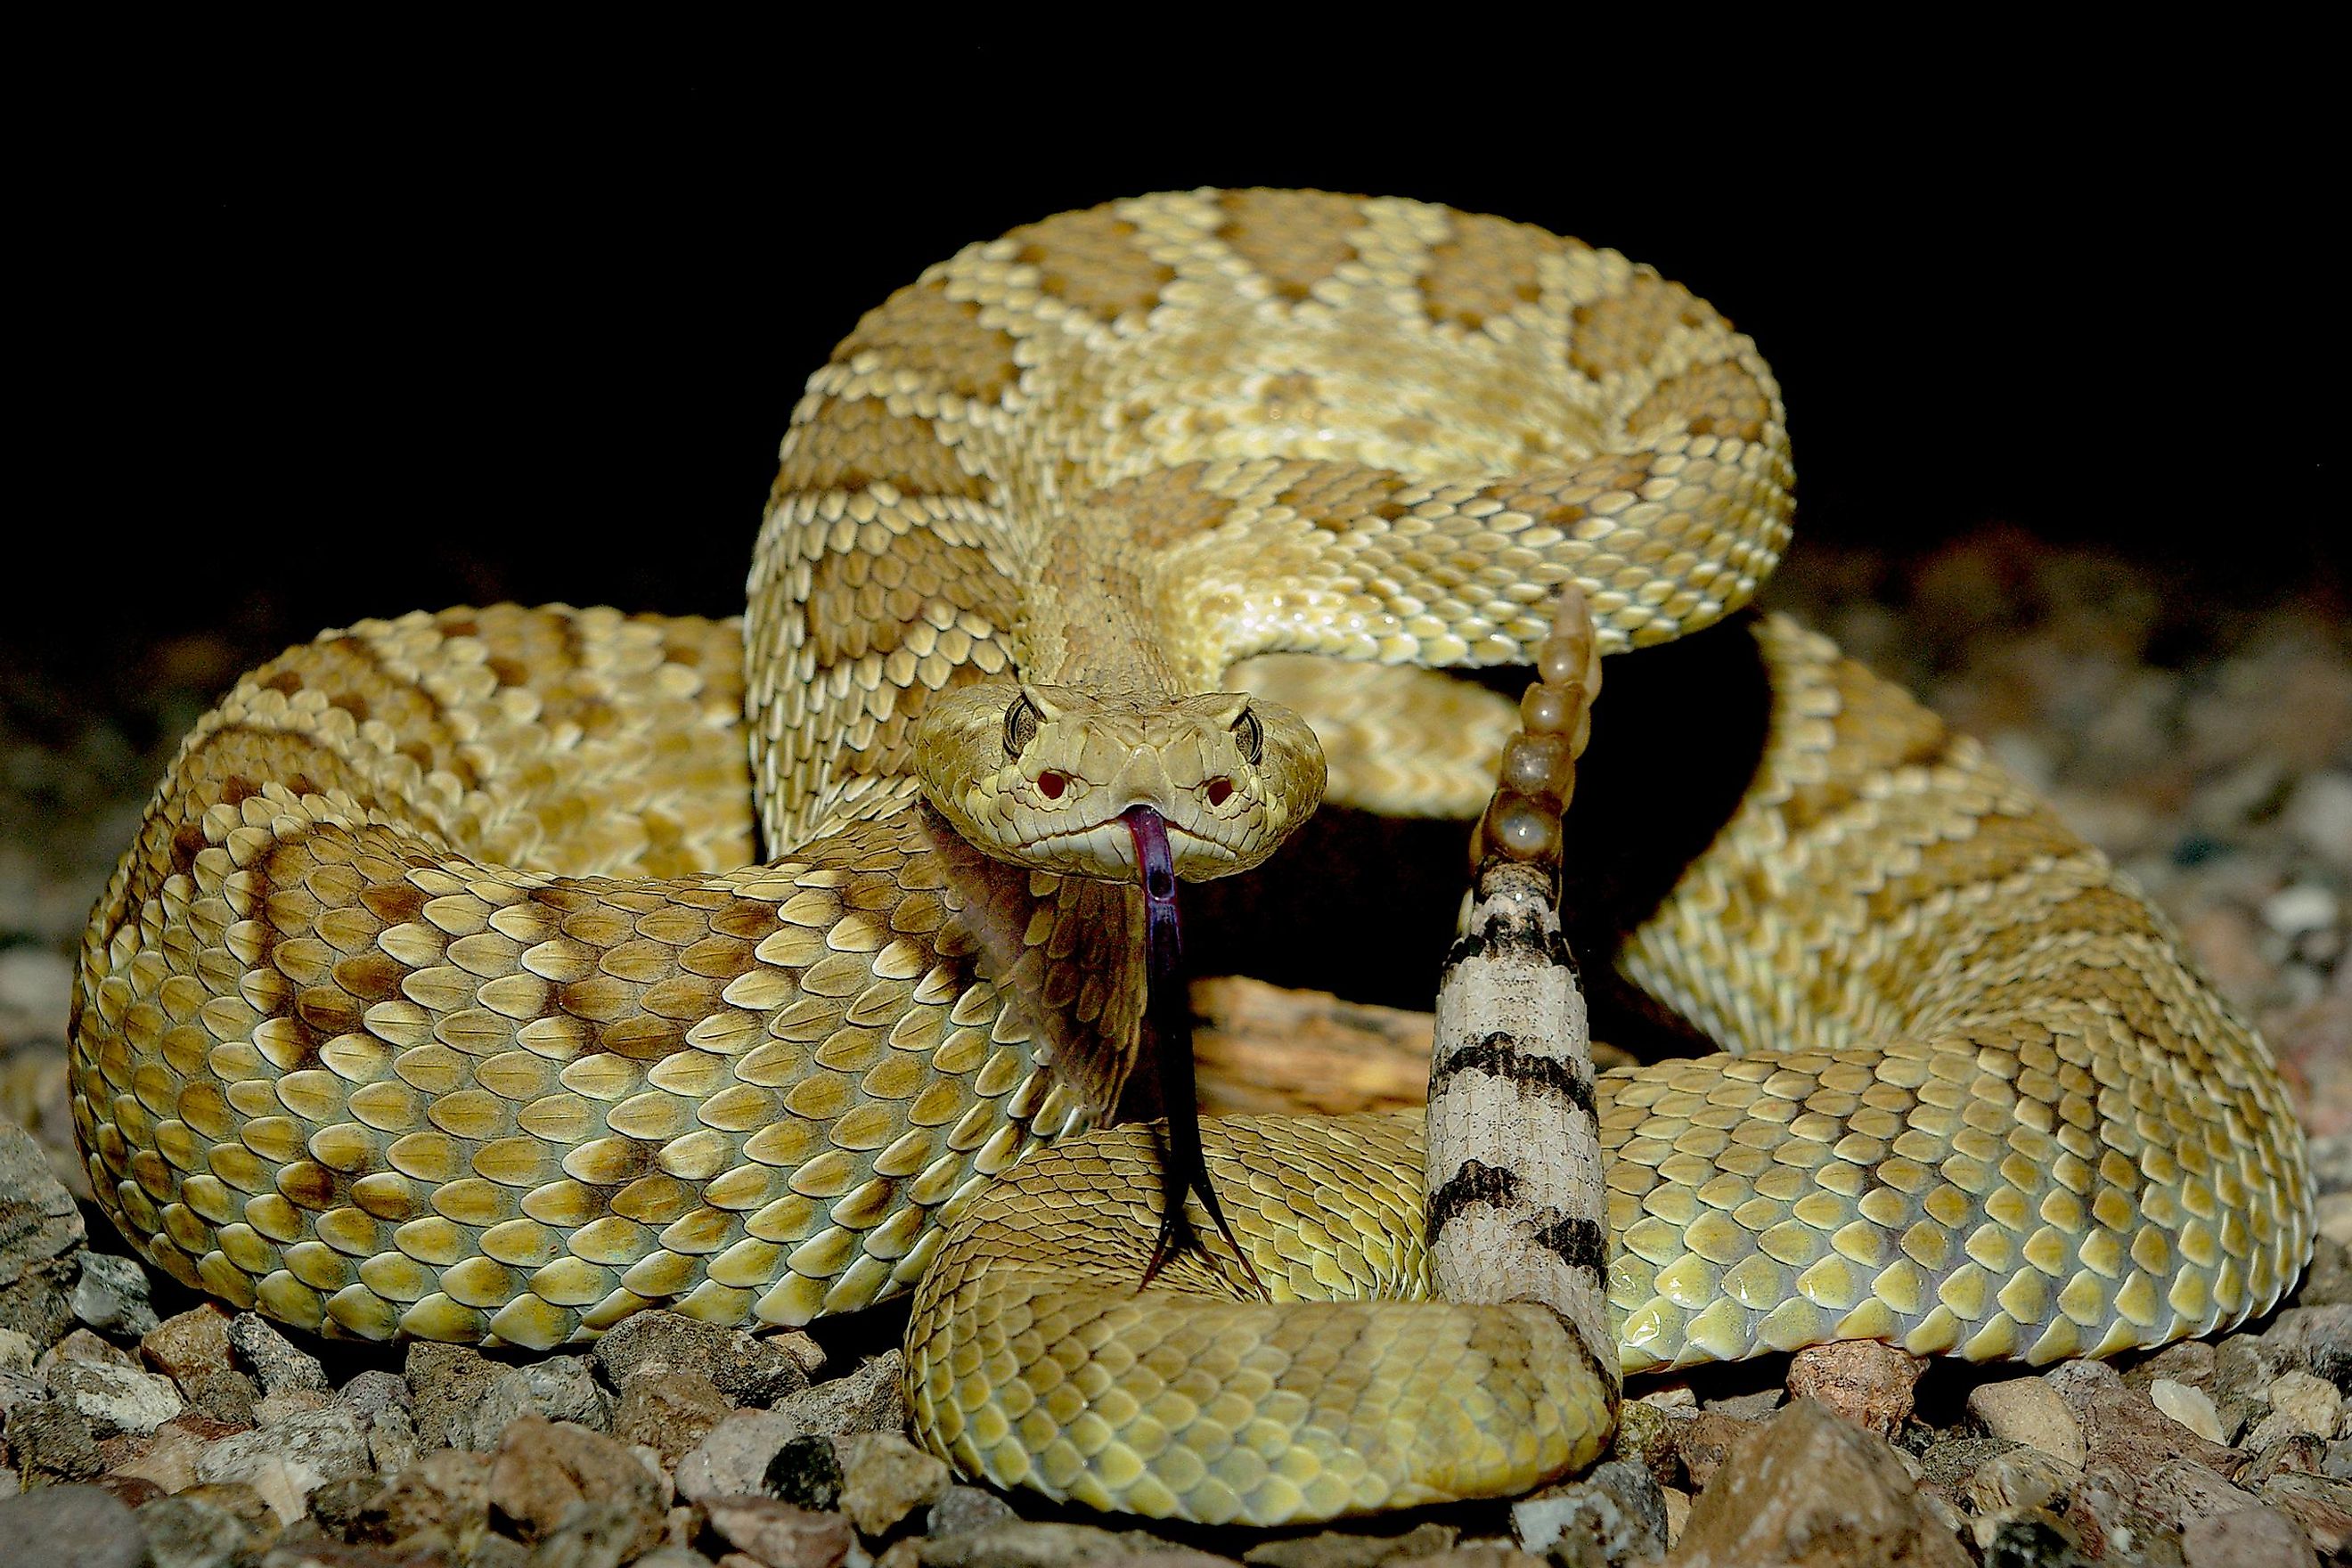 A Mohave rattlesnake.